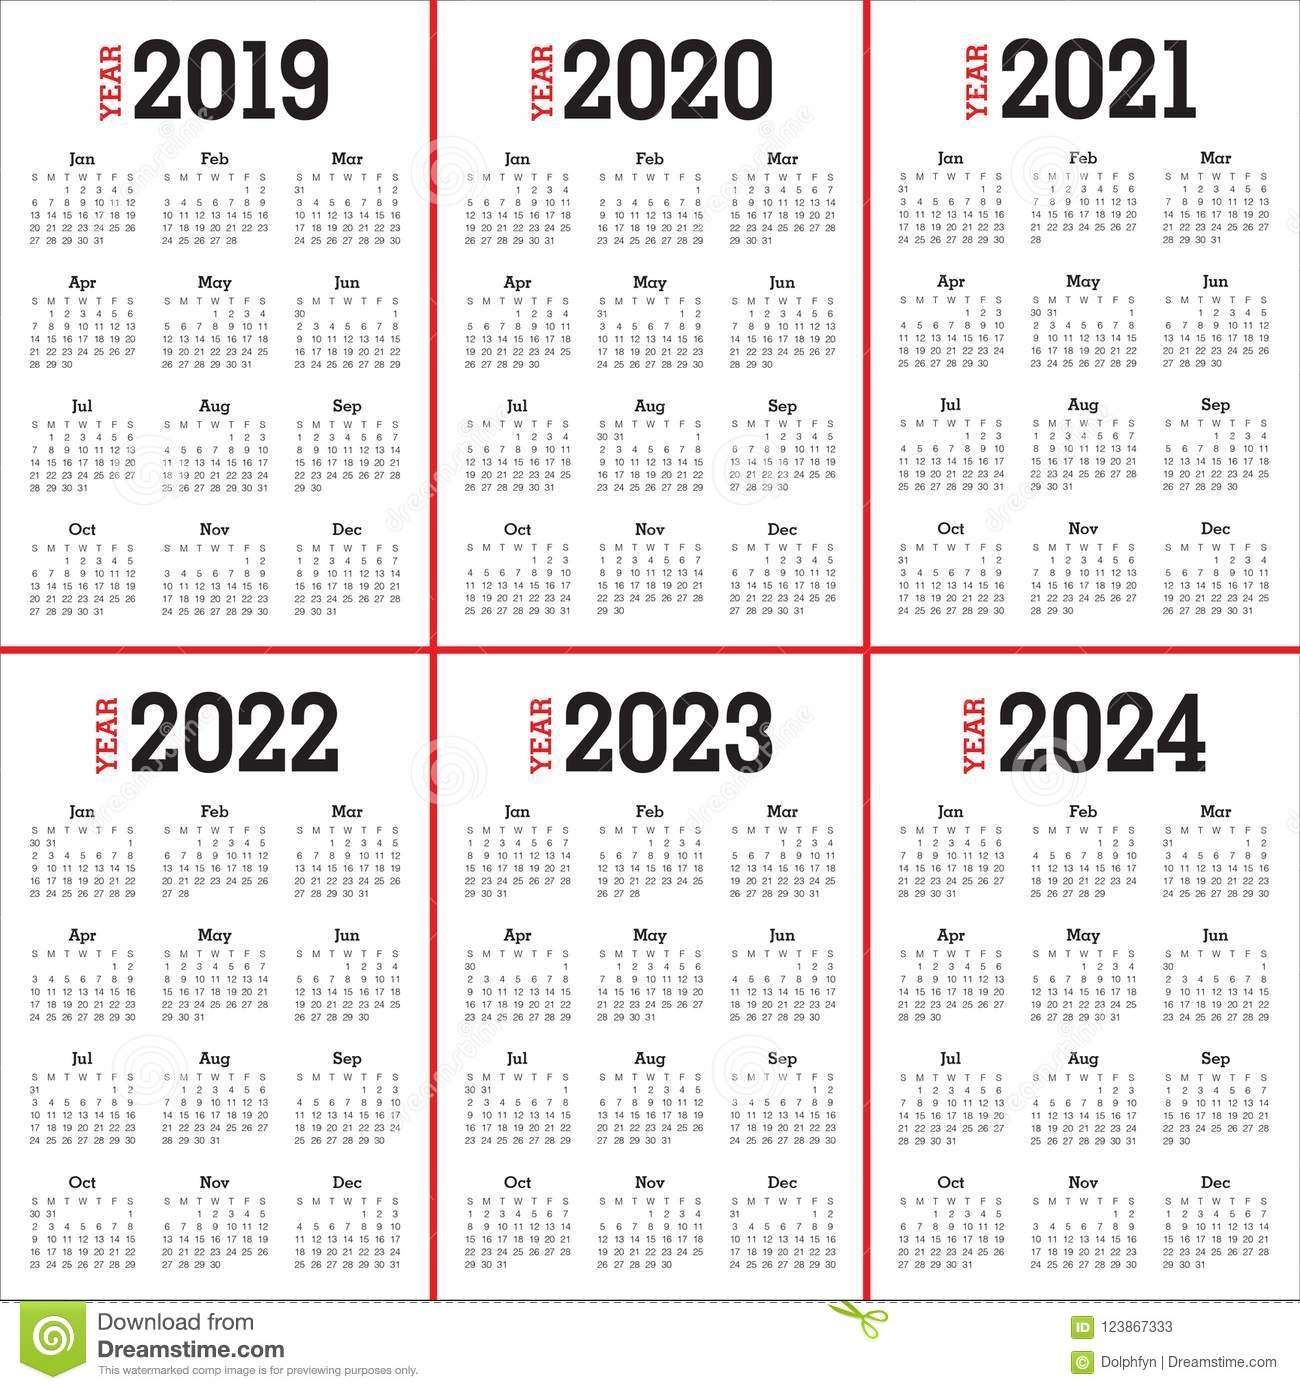 Catch Printable Calendars 2021 2022 2023 2024